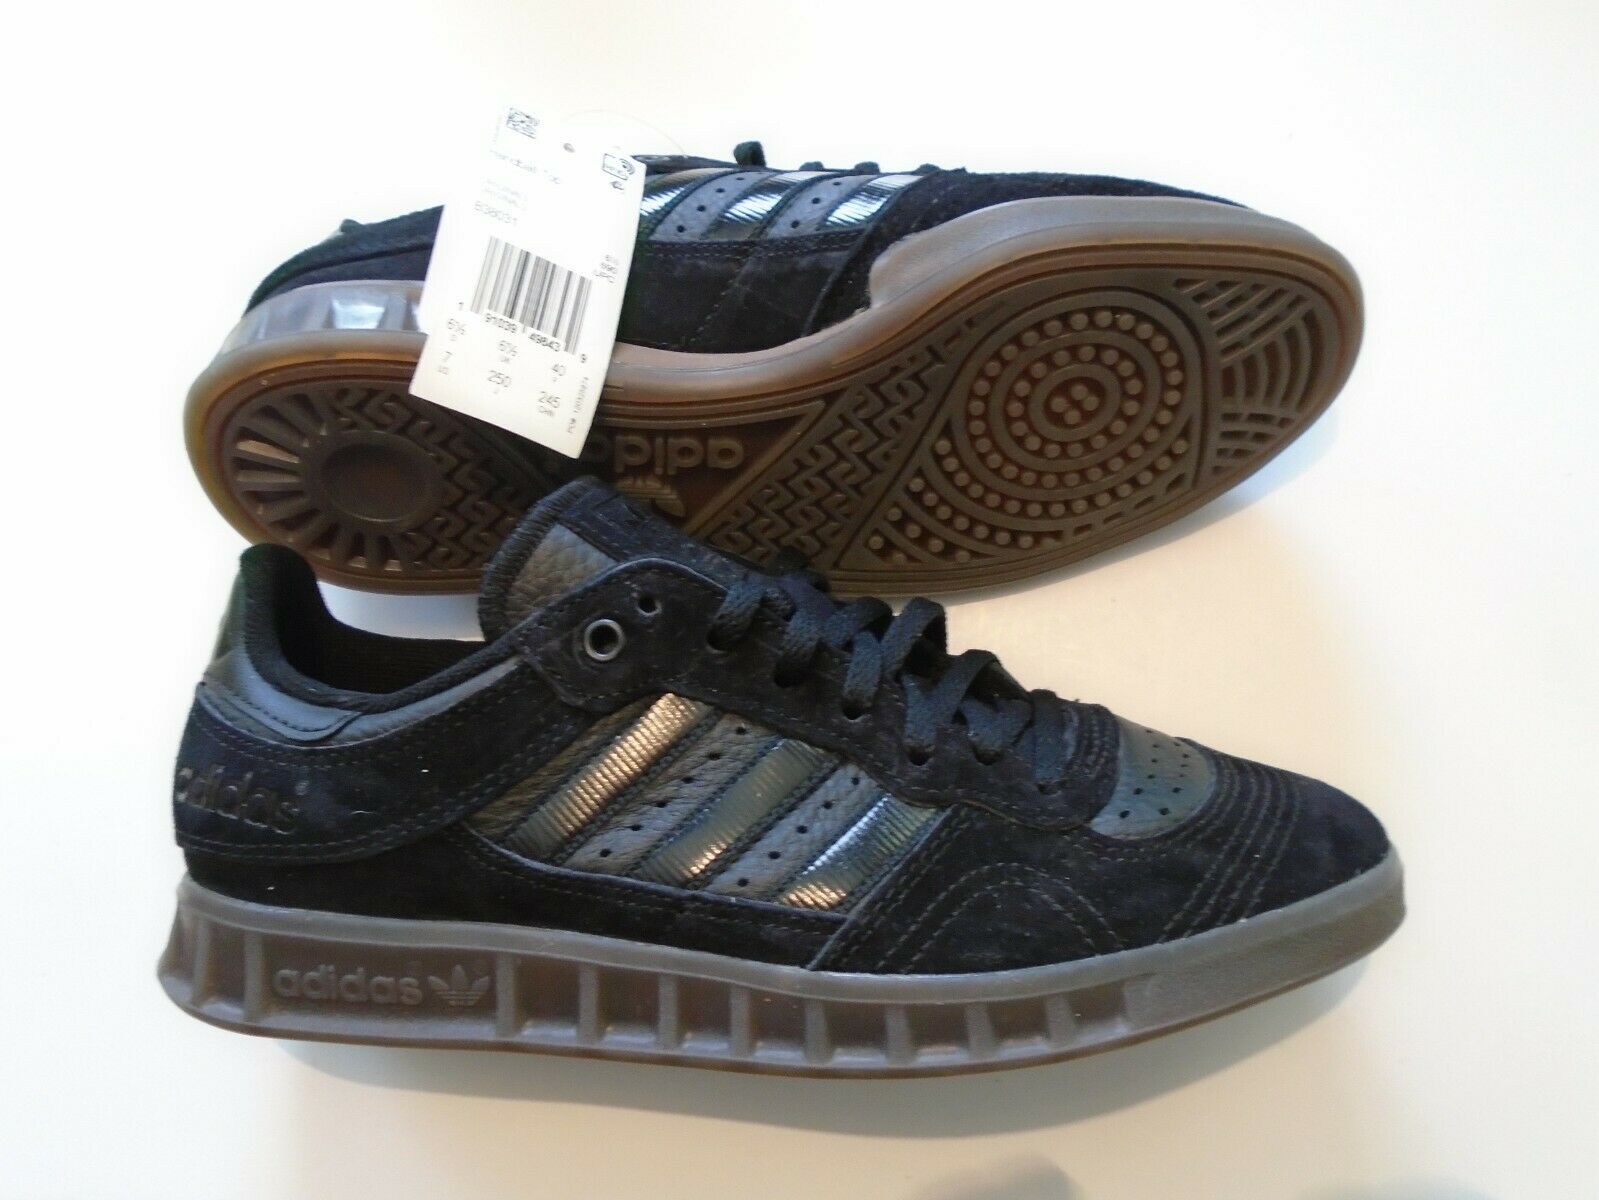 New Adidas Handball Top Men's Size 7 Black Leather Shoes B38031 Retro Vintage